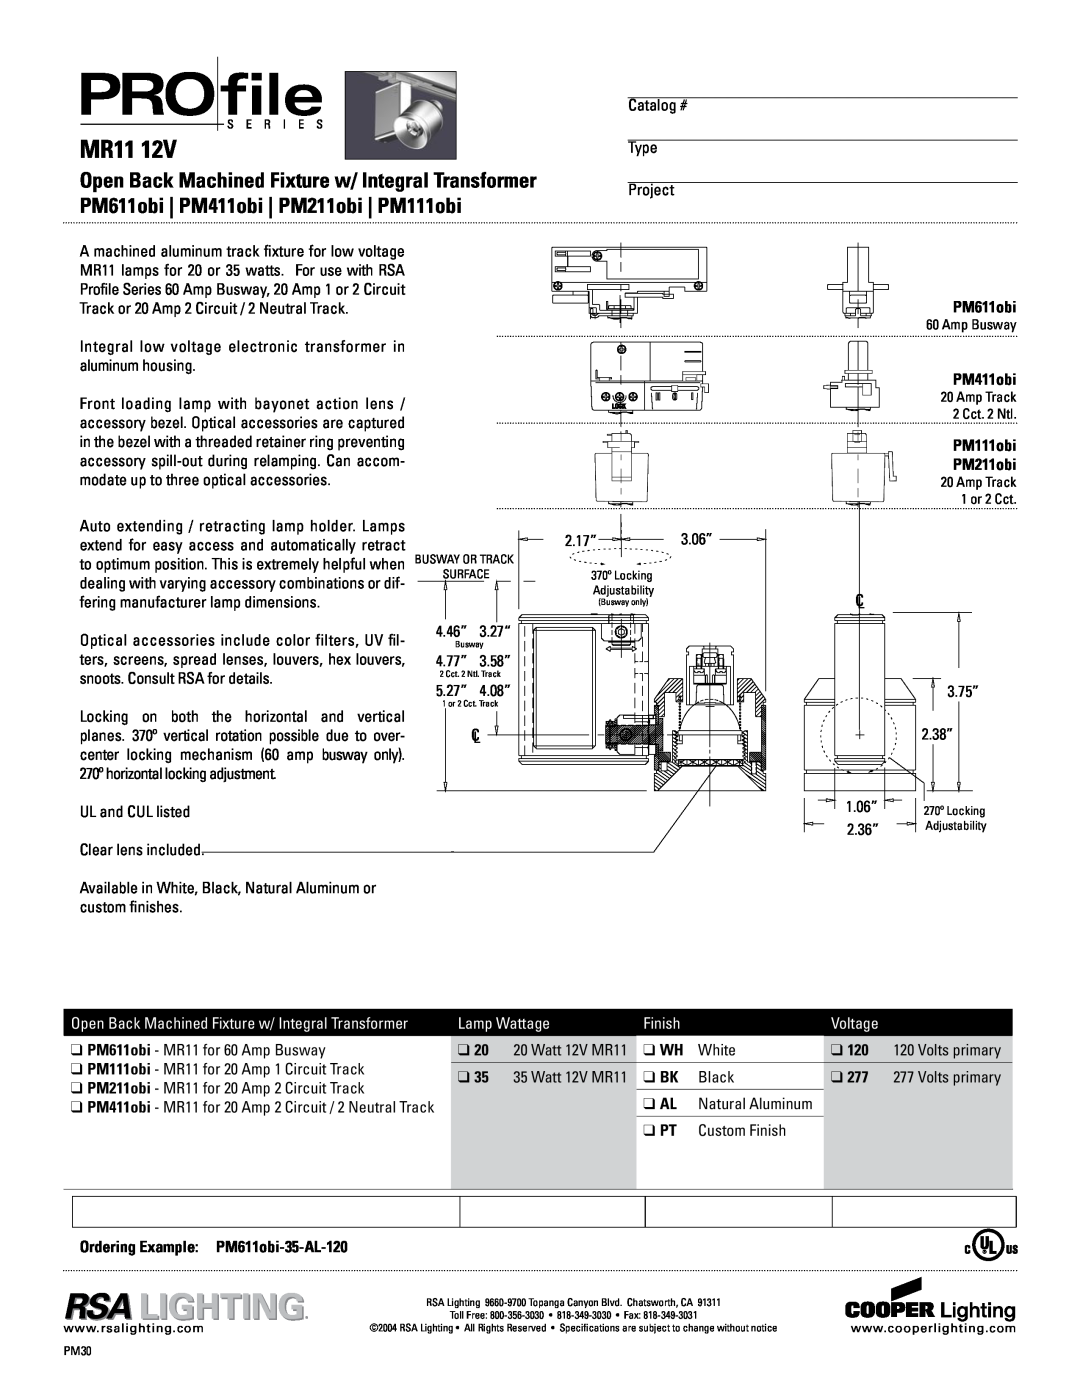 Cooper Lighting PM411obi, PM611obi, PM211obi, PM111obi specifications MR11, Lamp Wattage, Finish, Voltage 